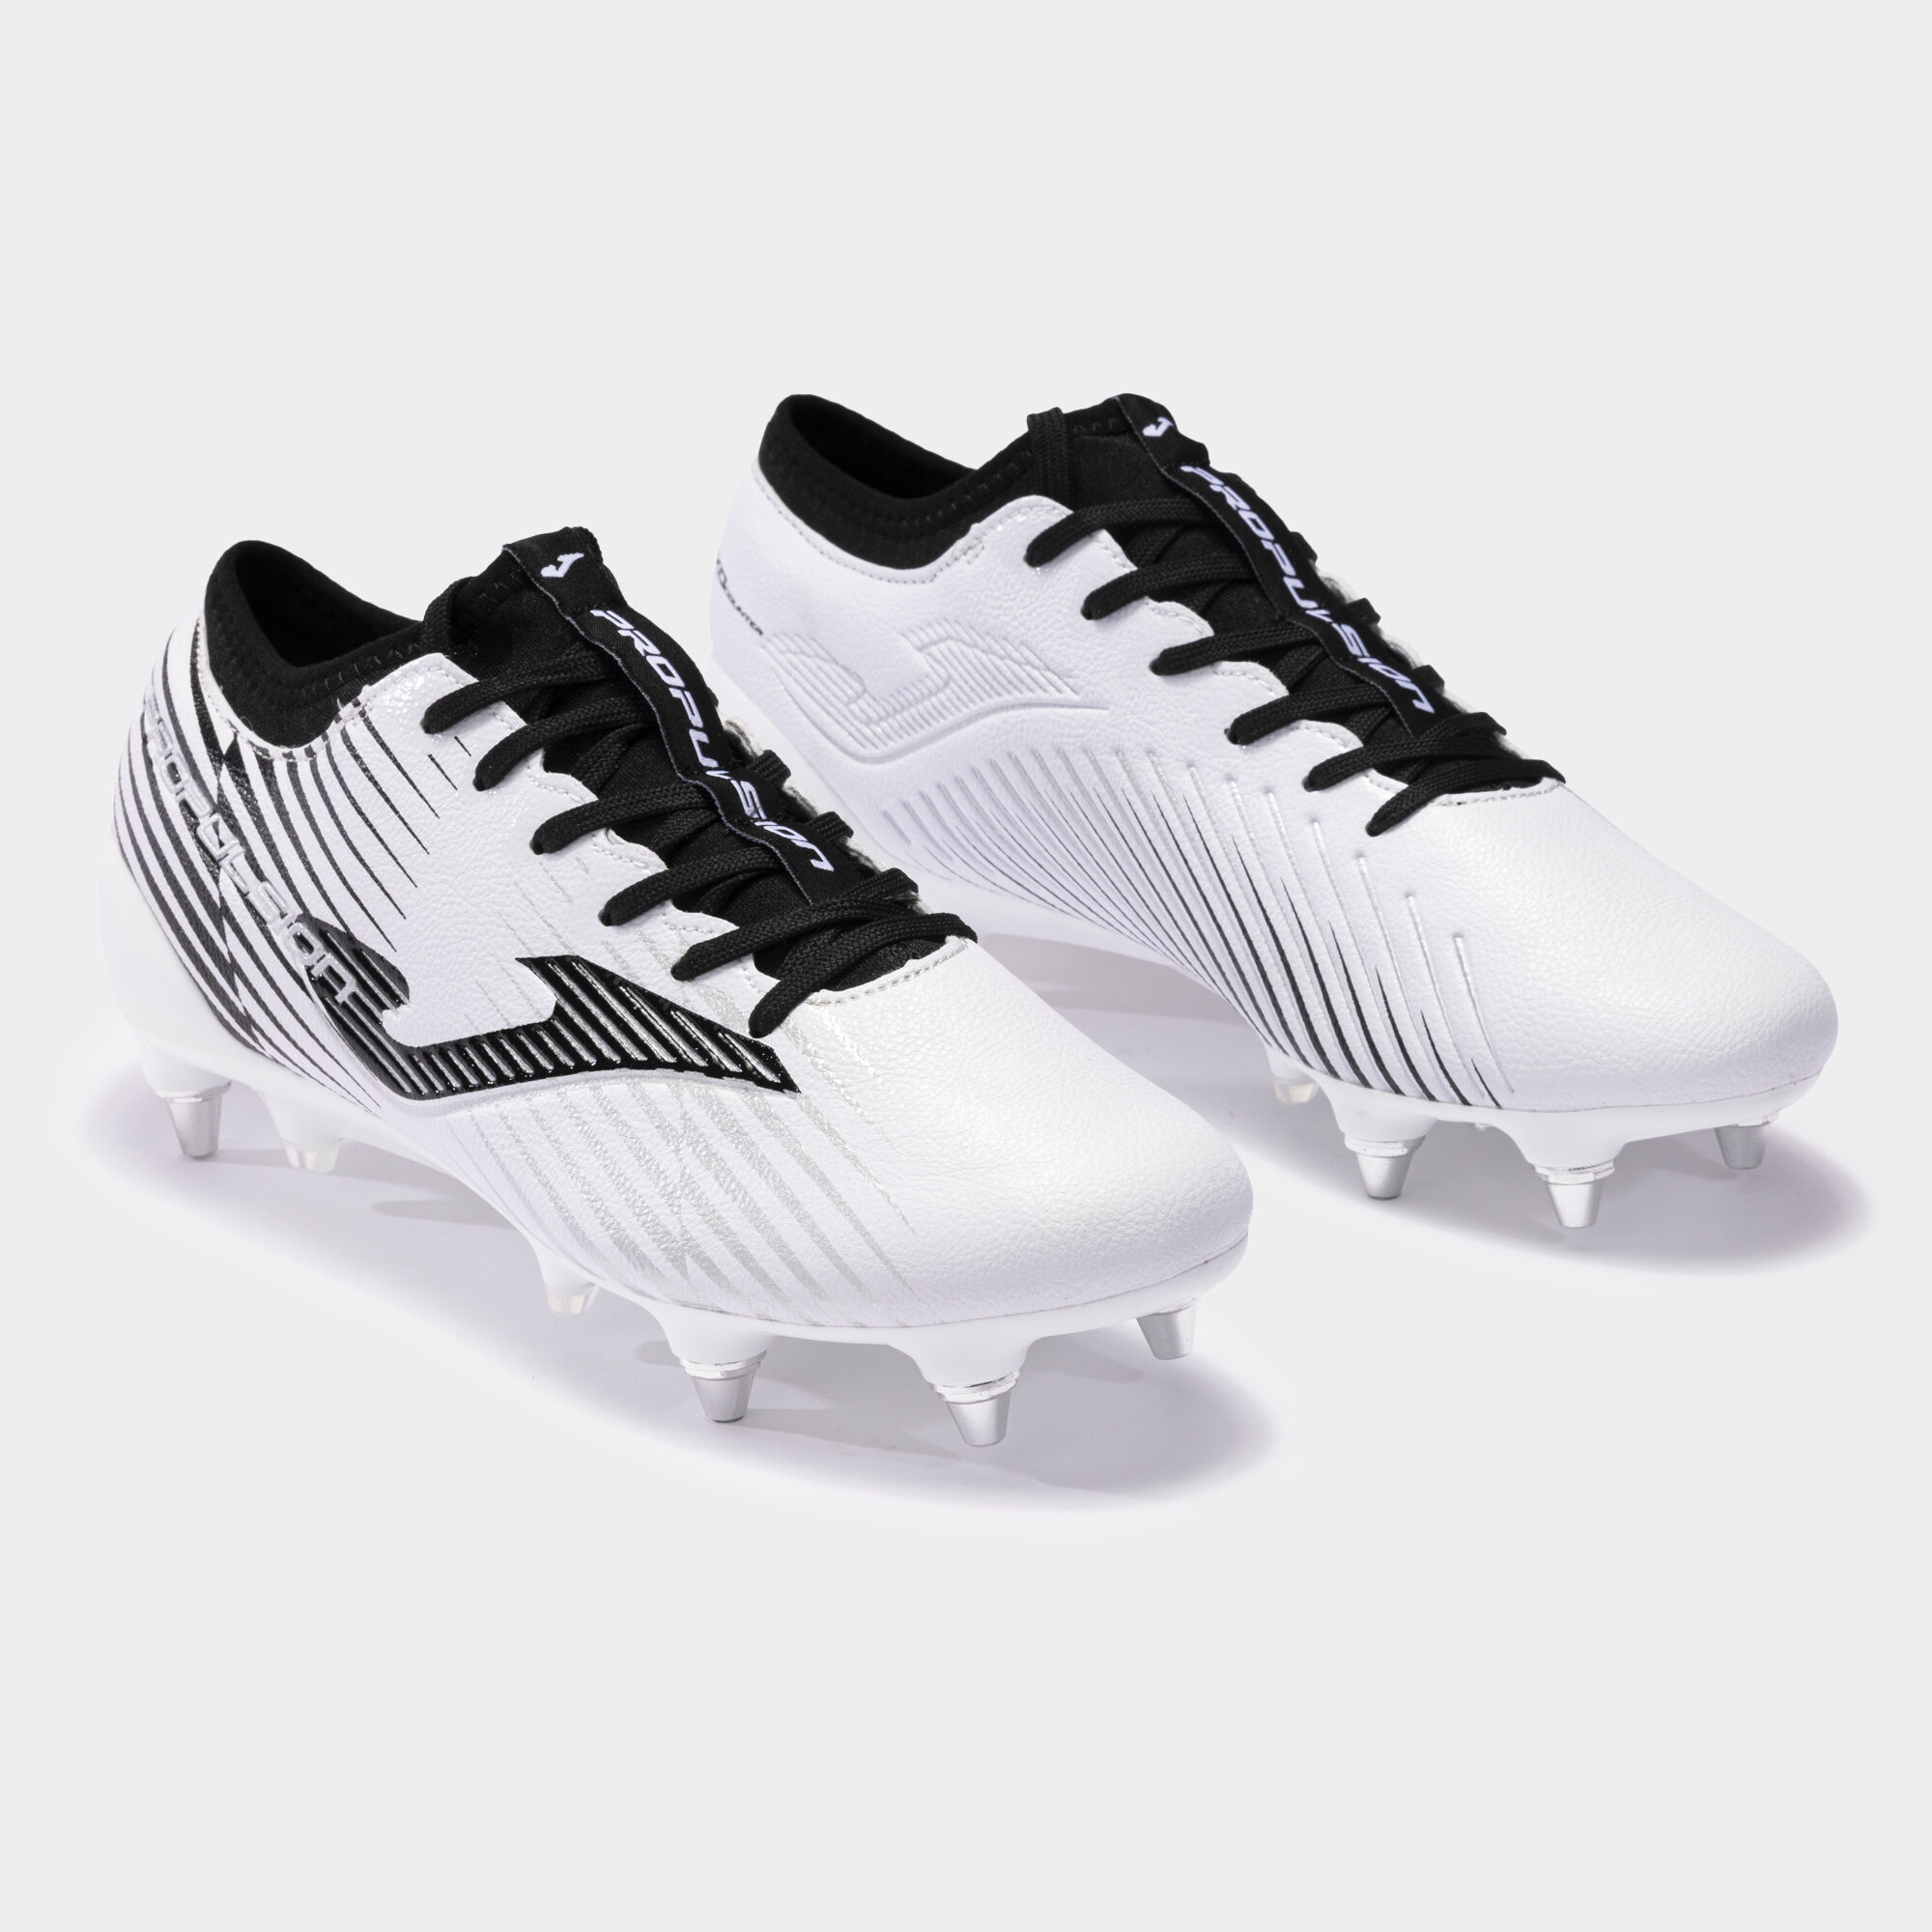 Chaussures football Propulsion Cup 23 terrain souple SG blanc noir